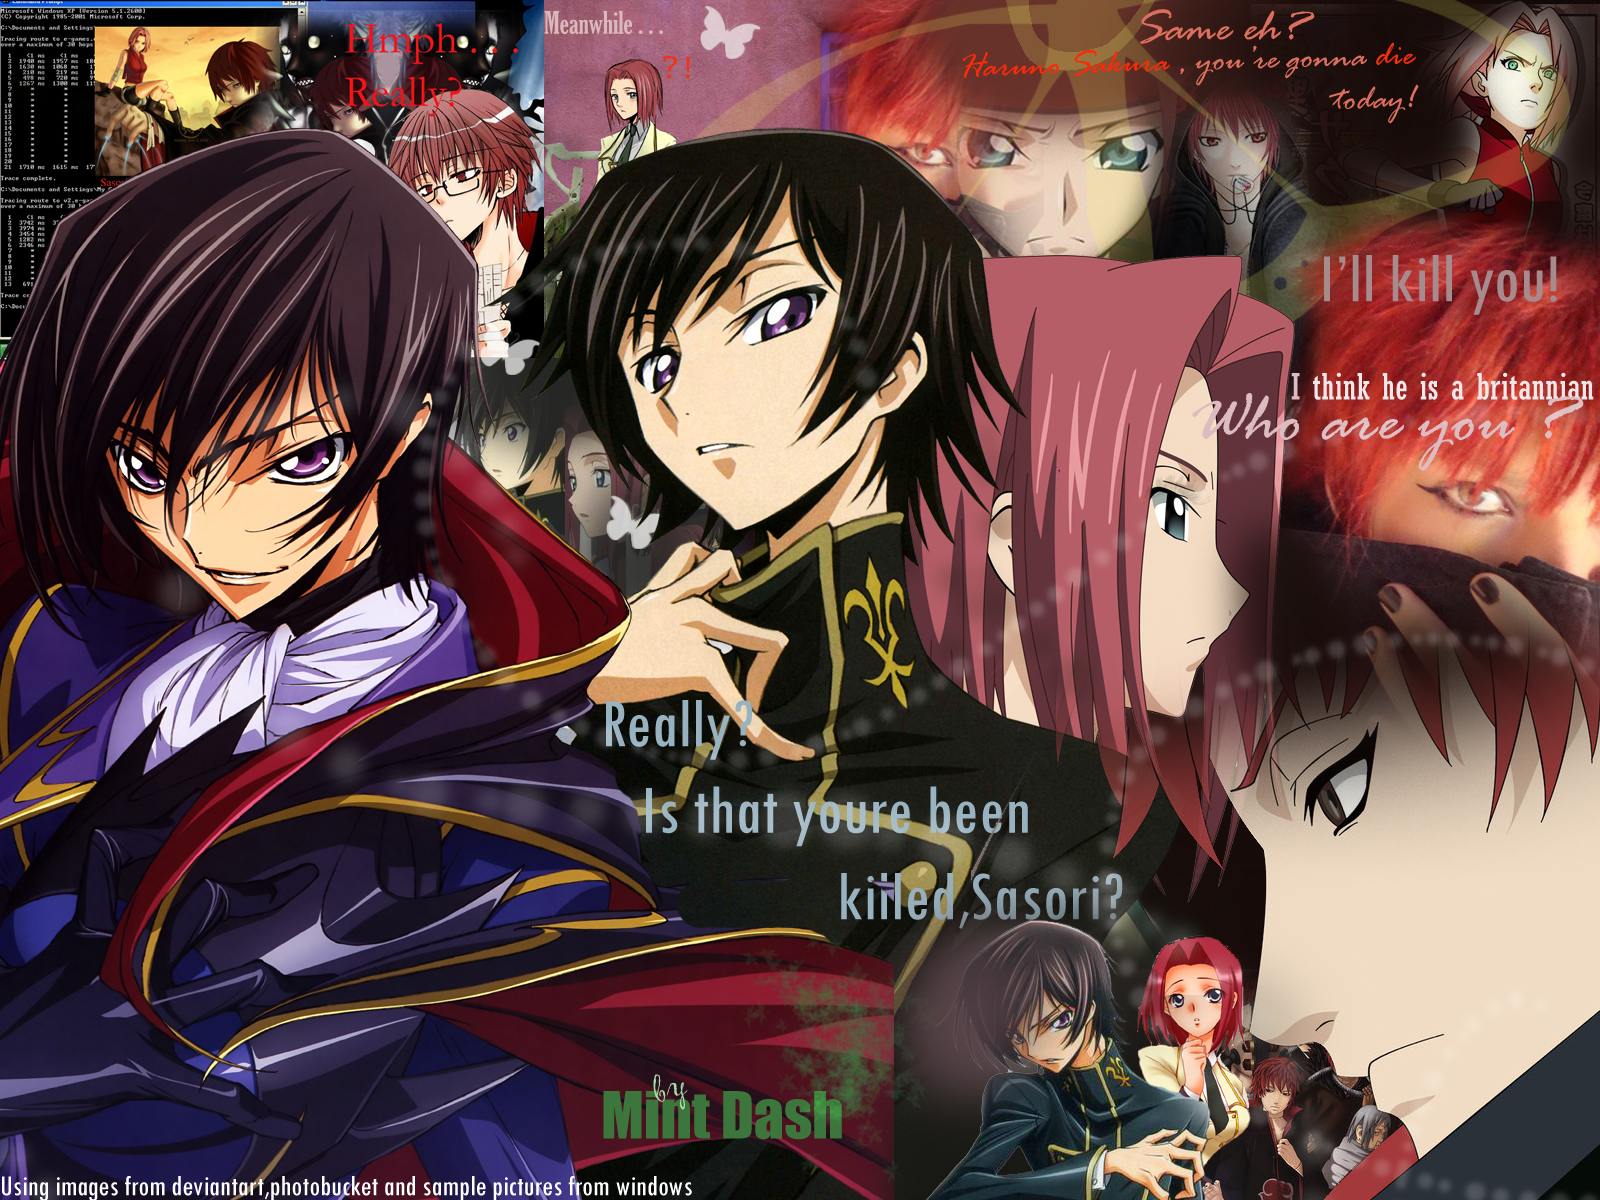 Descarga gratuita de fondo de pantalla para móvil de Crossover, Animado, Lelouch Lamperouge, Suzaku Kururugi, Sakura Haruno, Sasori (Naruto), Kallen Kozuki.